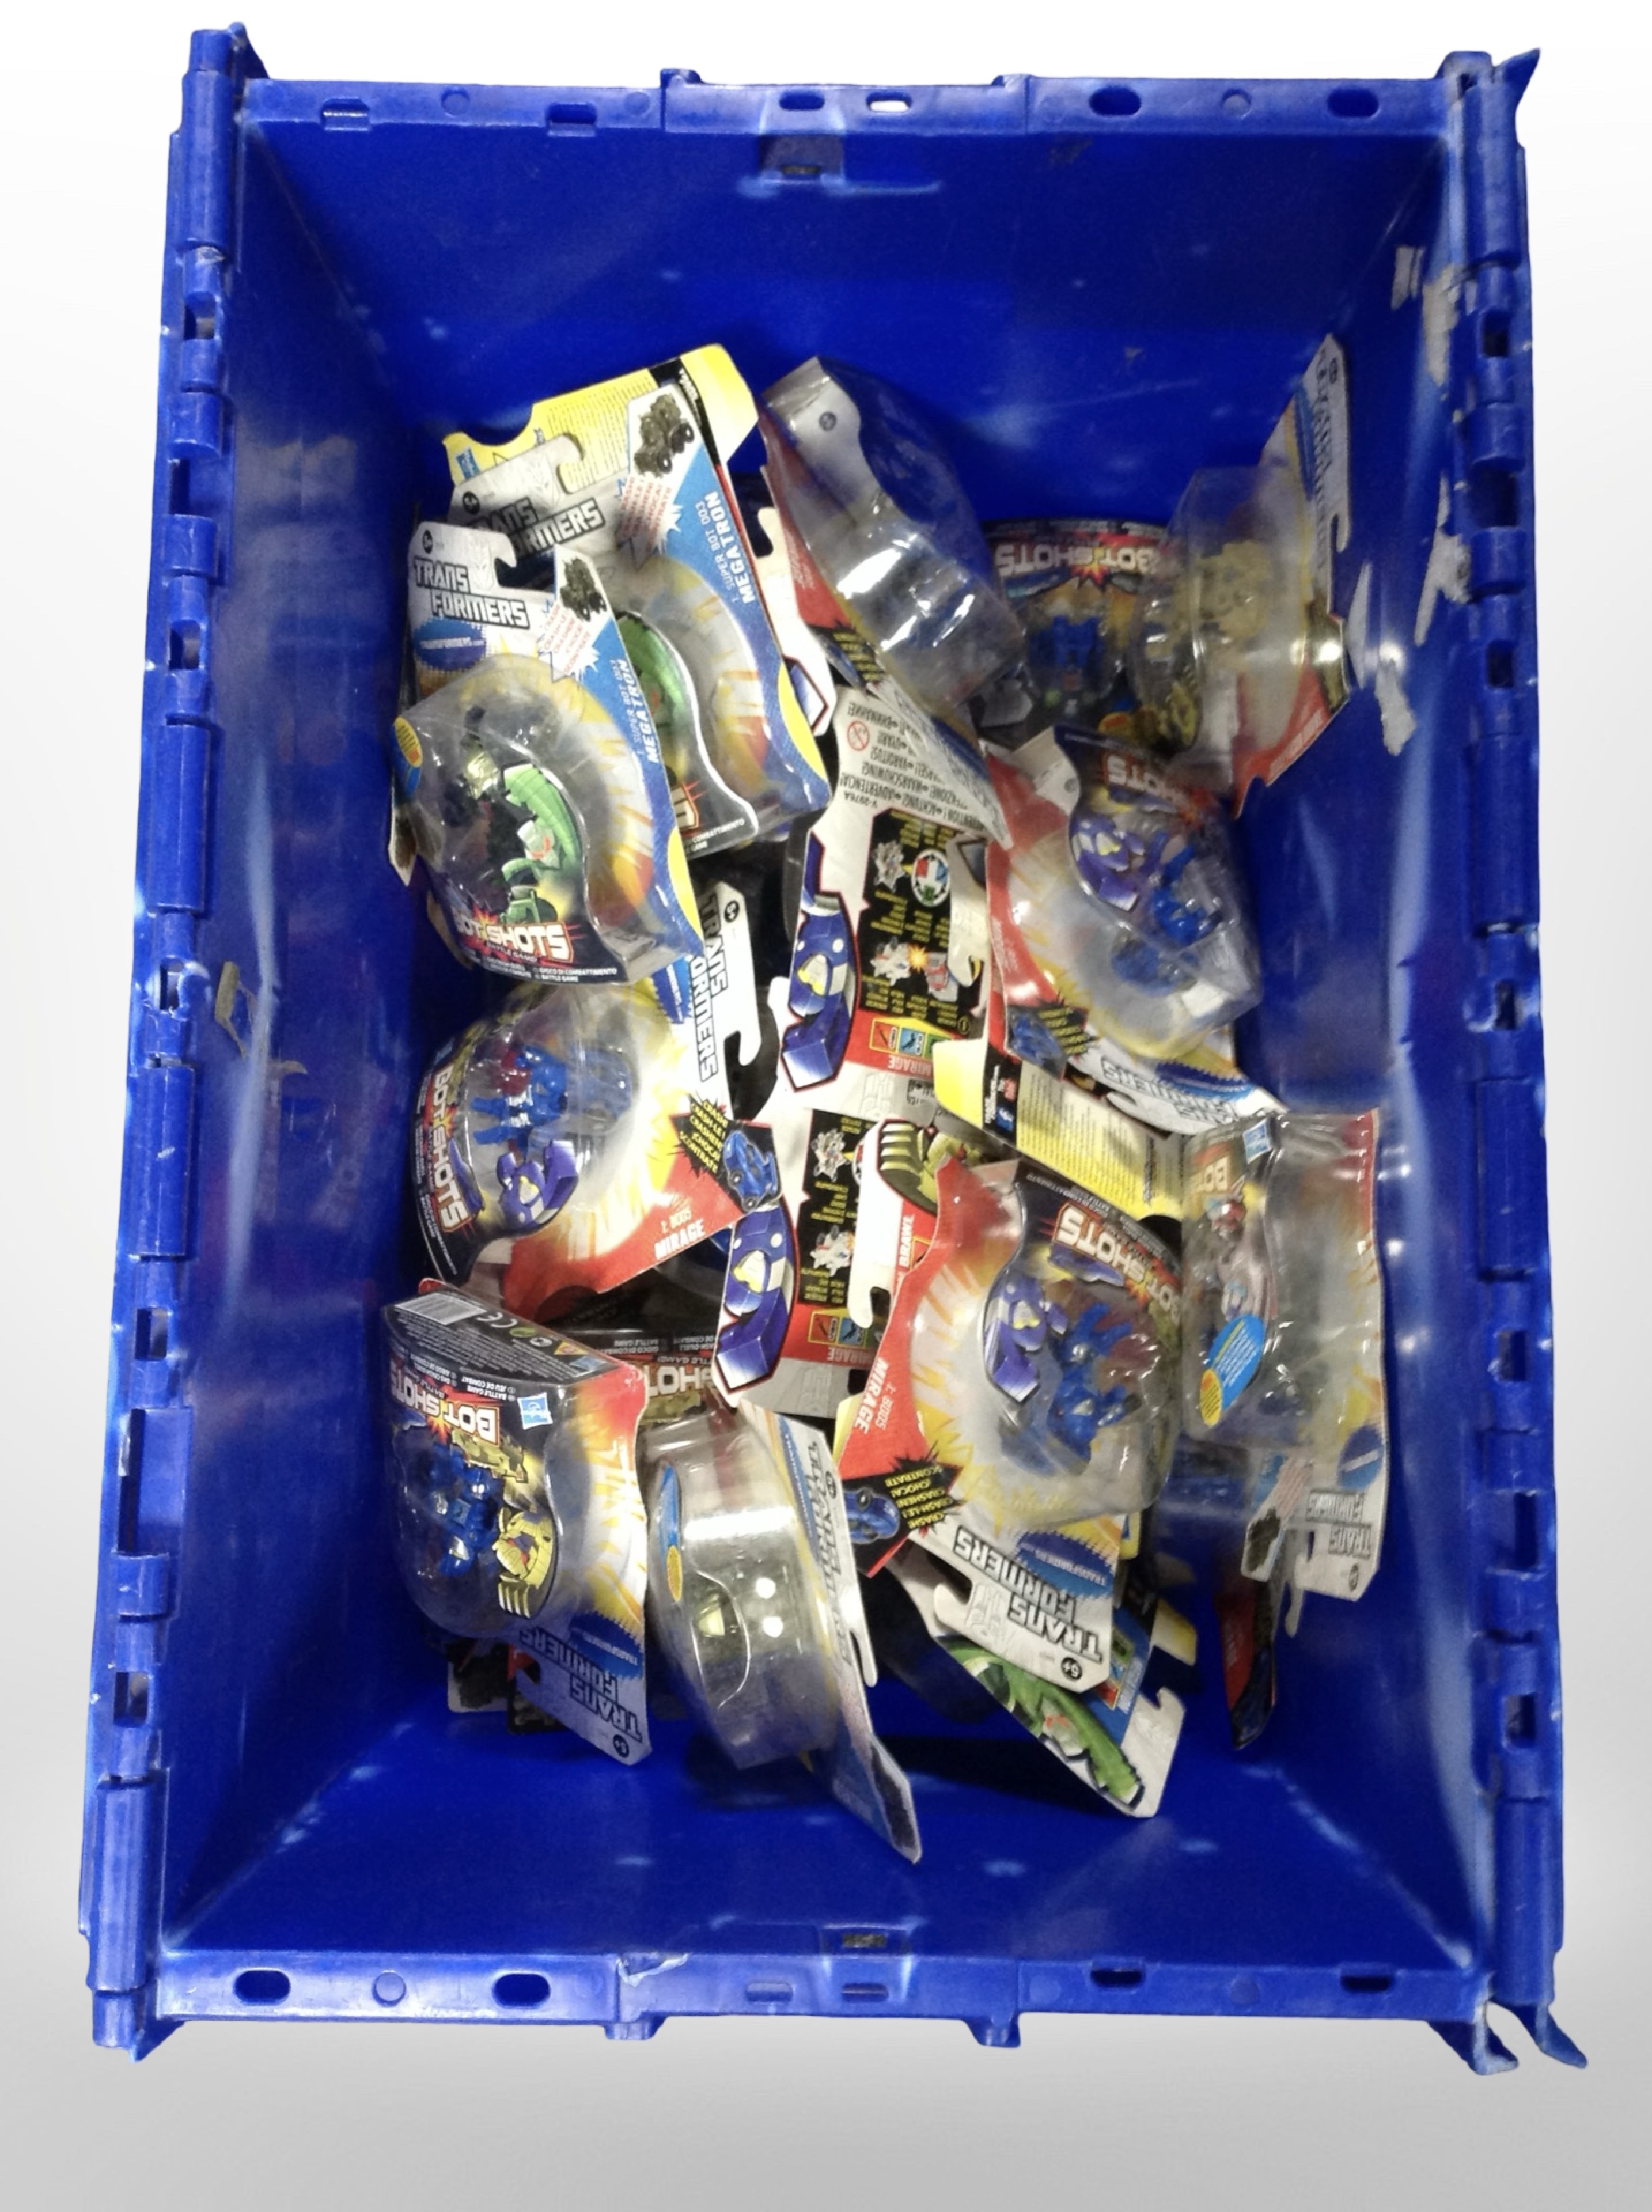 38 Hasbro Transformers figurines, boxed.